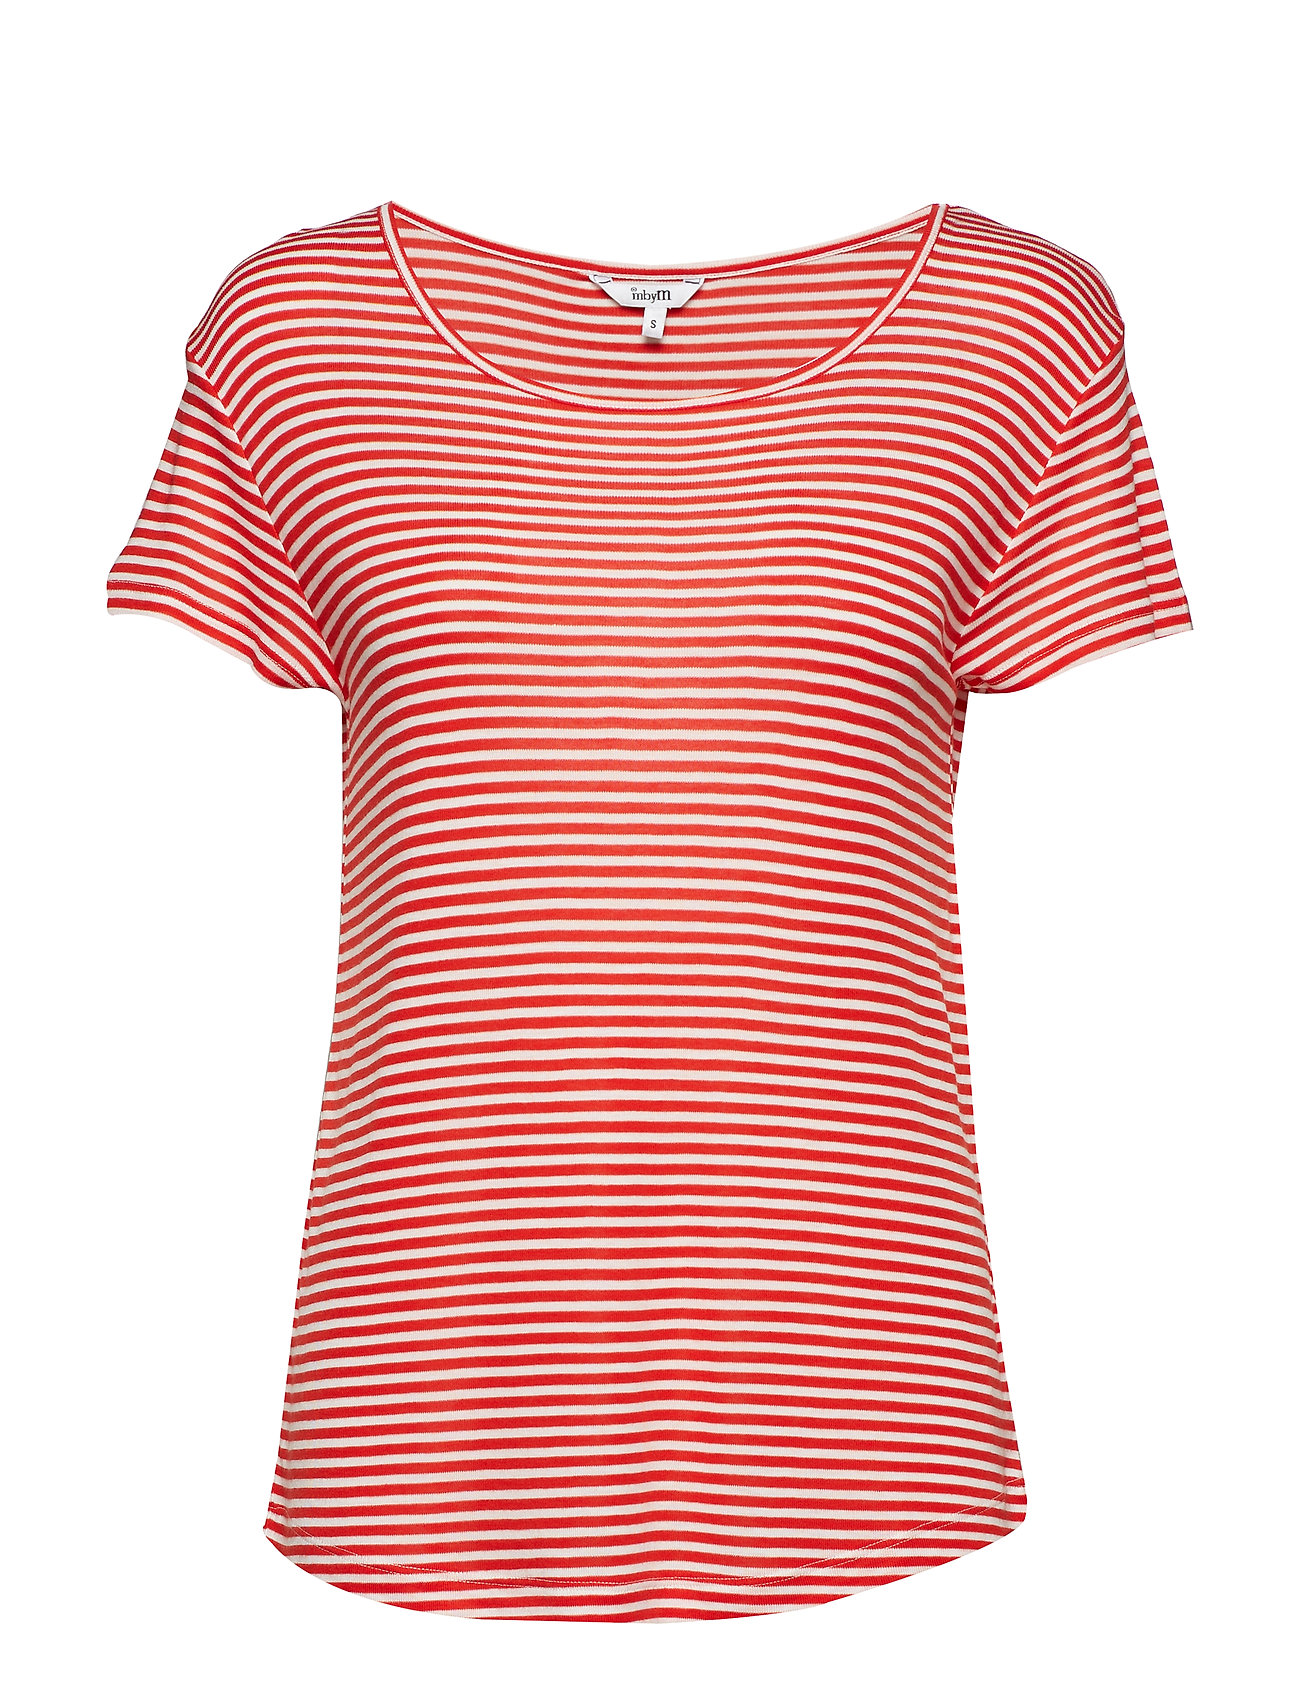 Lucianna T-shirts & Tops Short-sleeved Punainen MbyM, mbyM